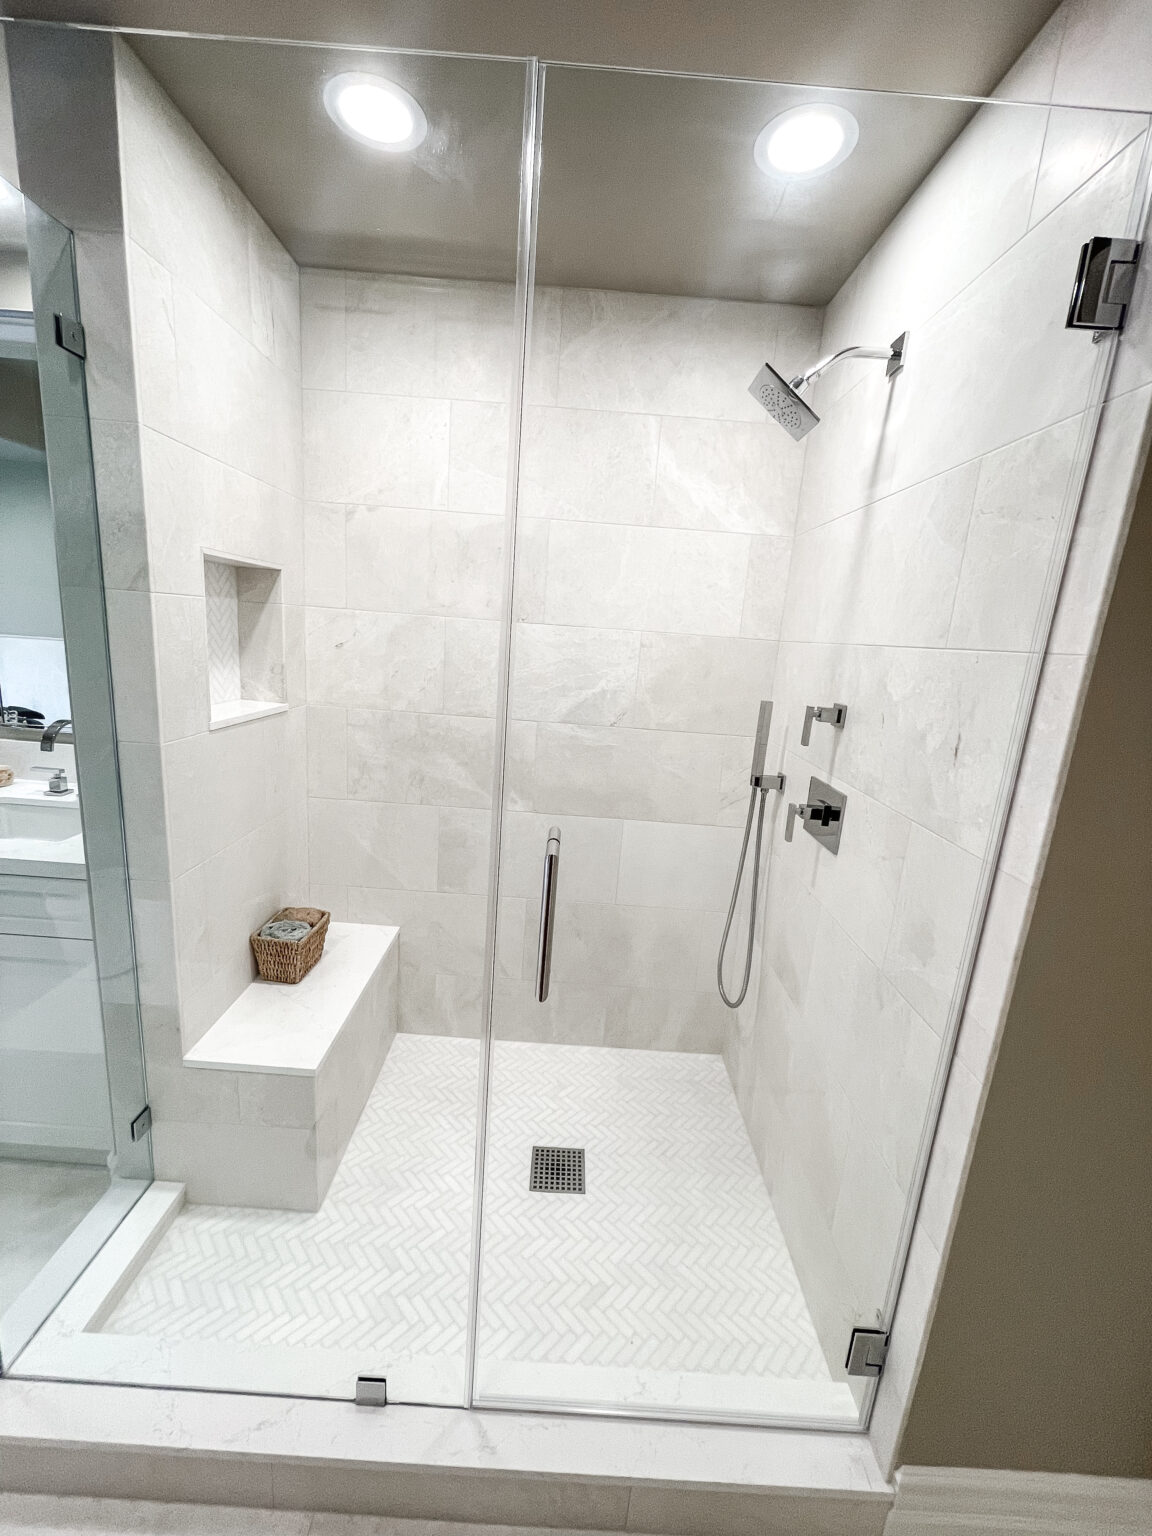 clean bath nashville bath remodeling Bathroom remodeling in Nashville by Tura Renovation contractors